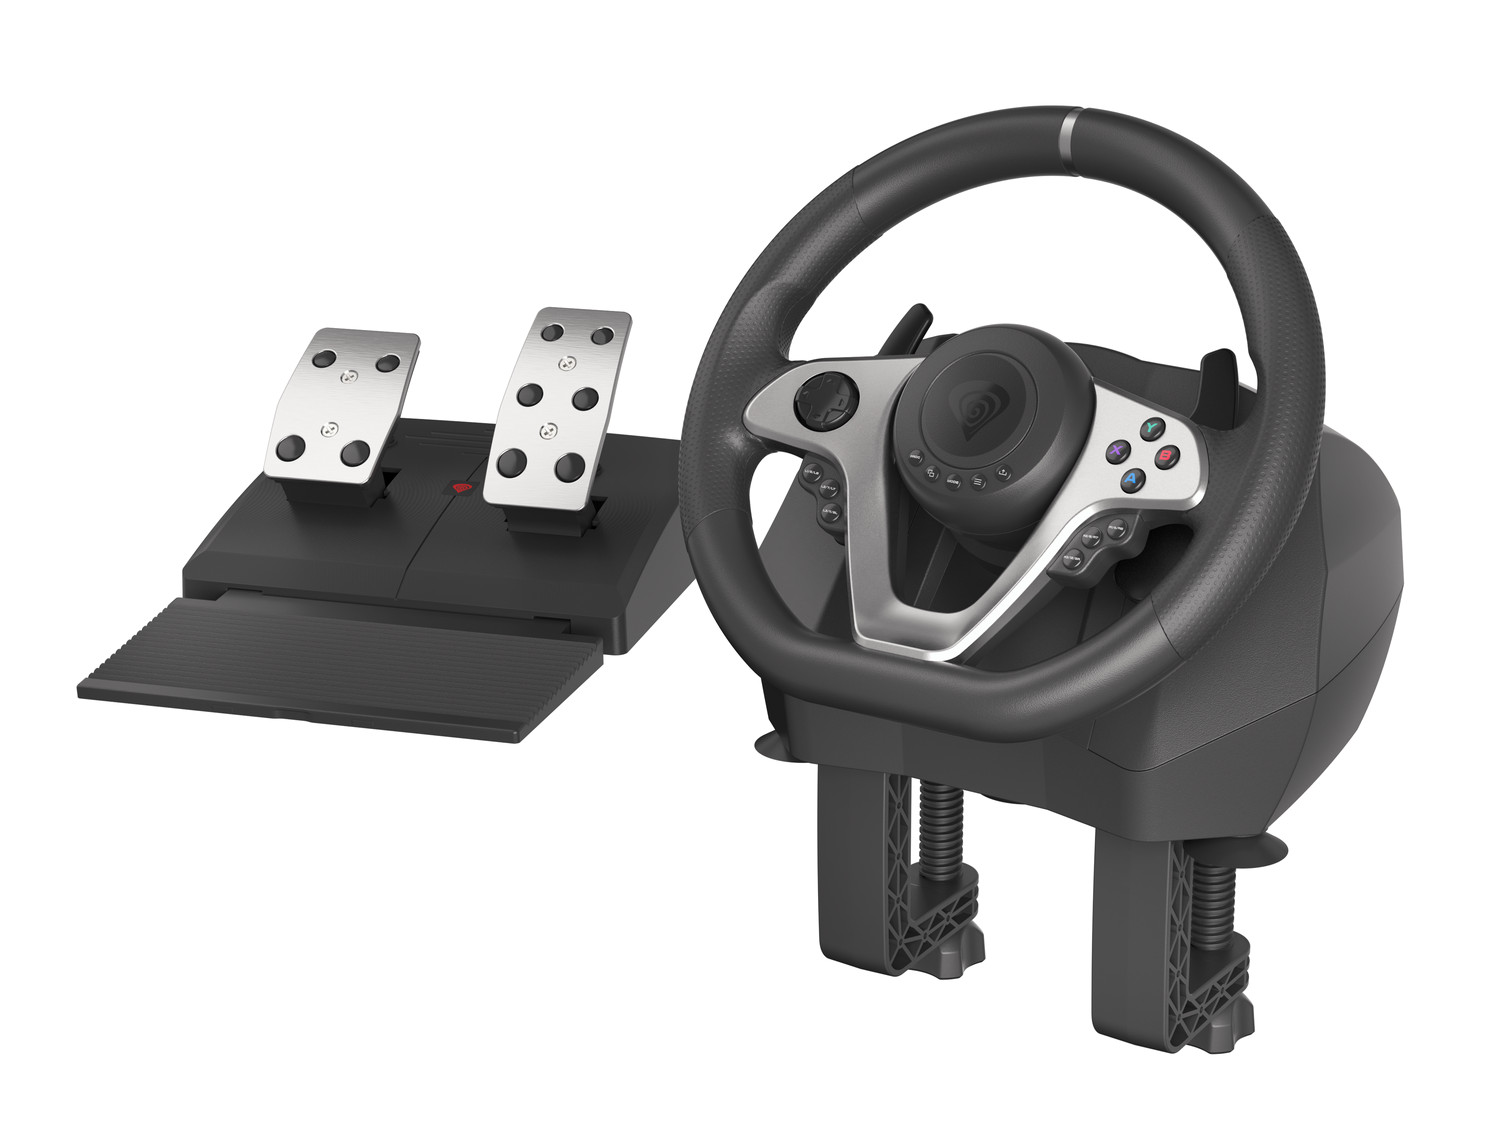 Herní volant Genesis Seaborg 400, multiplatformní pro PC, PS4, PS3, Xbox One,  Xbox 360, Nintendo Switch